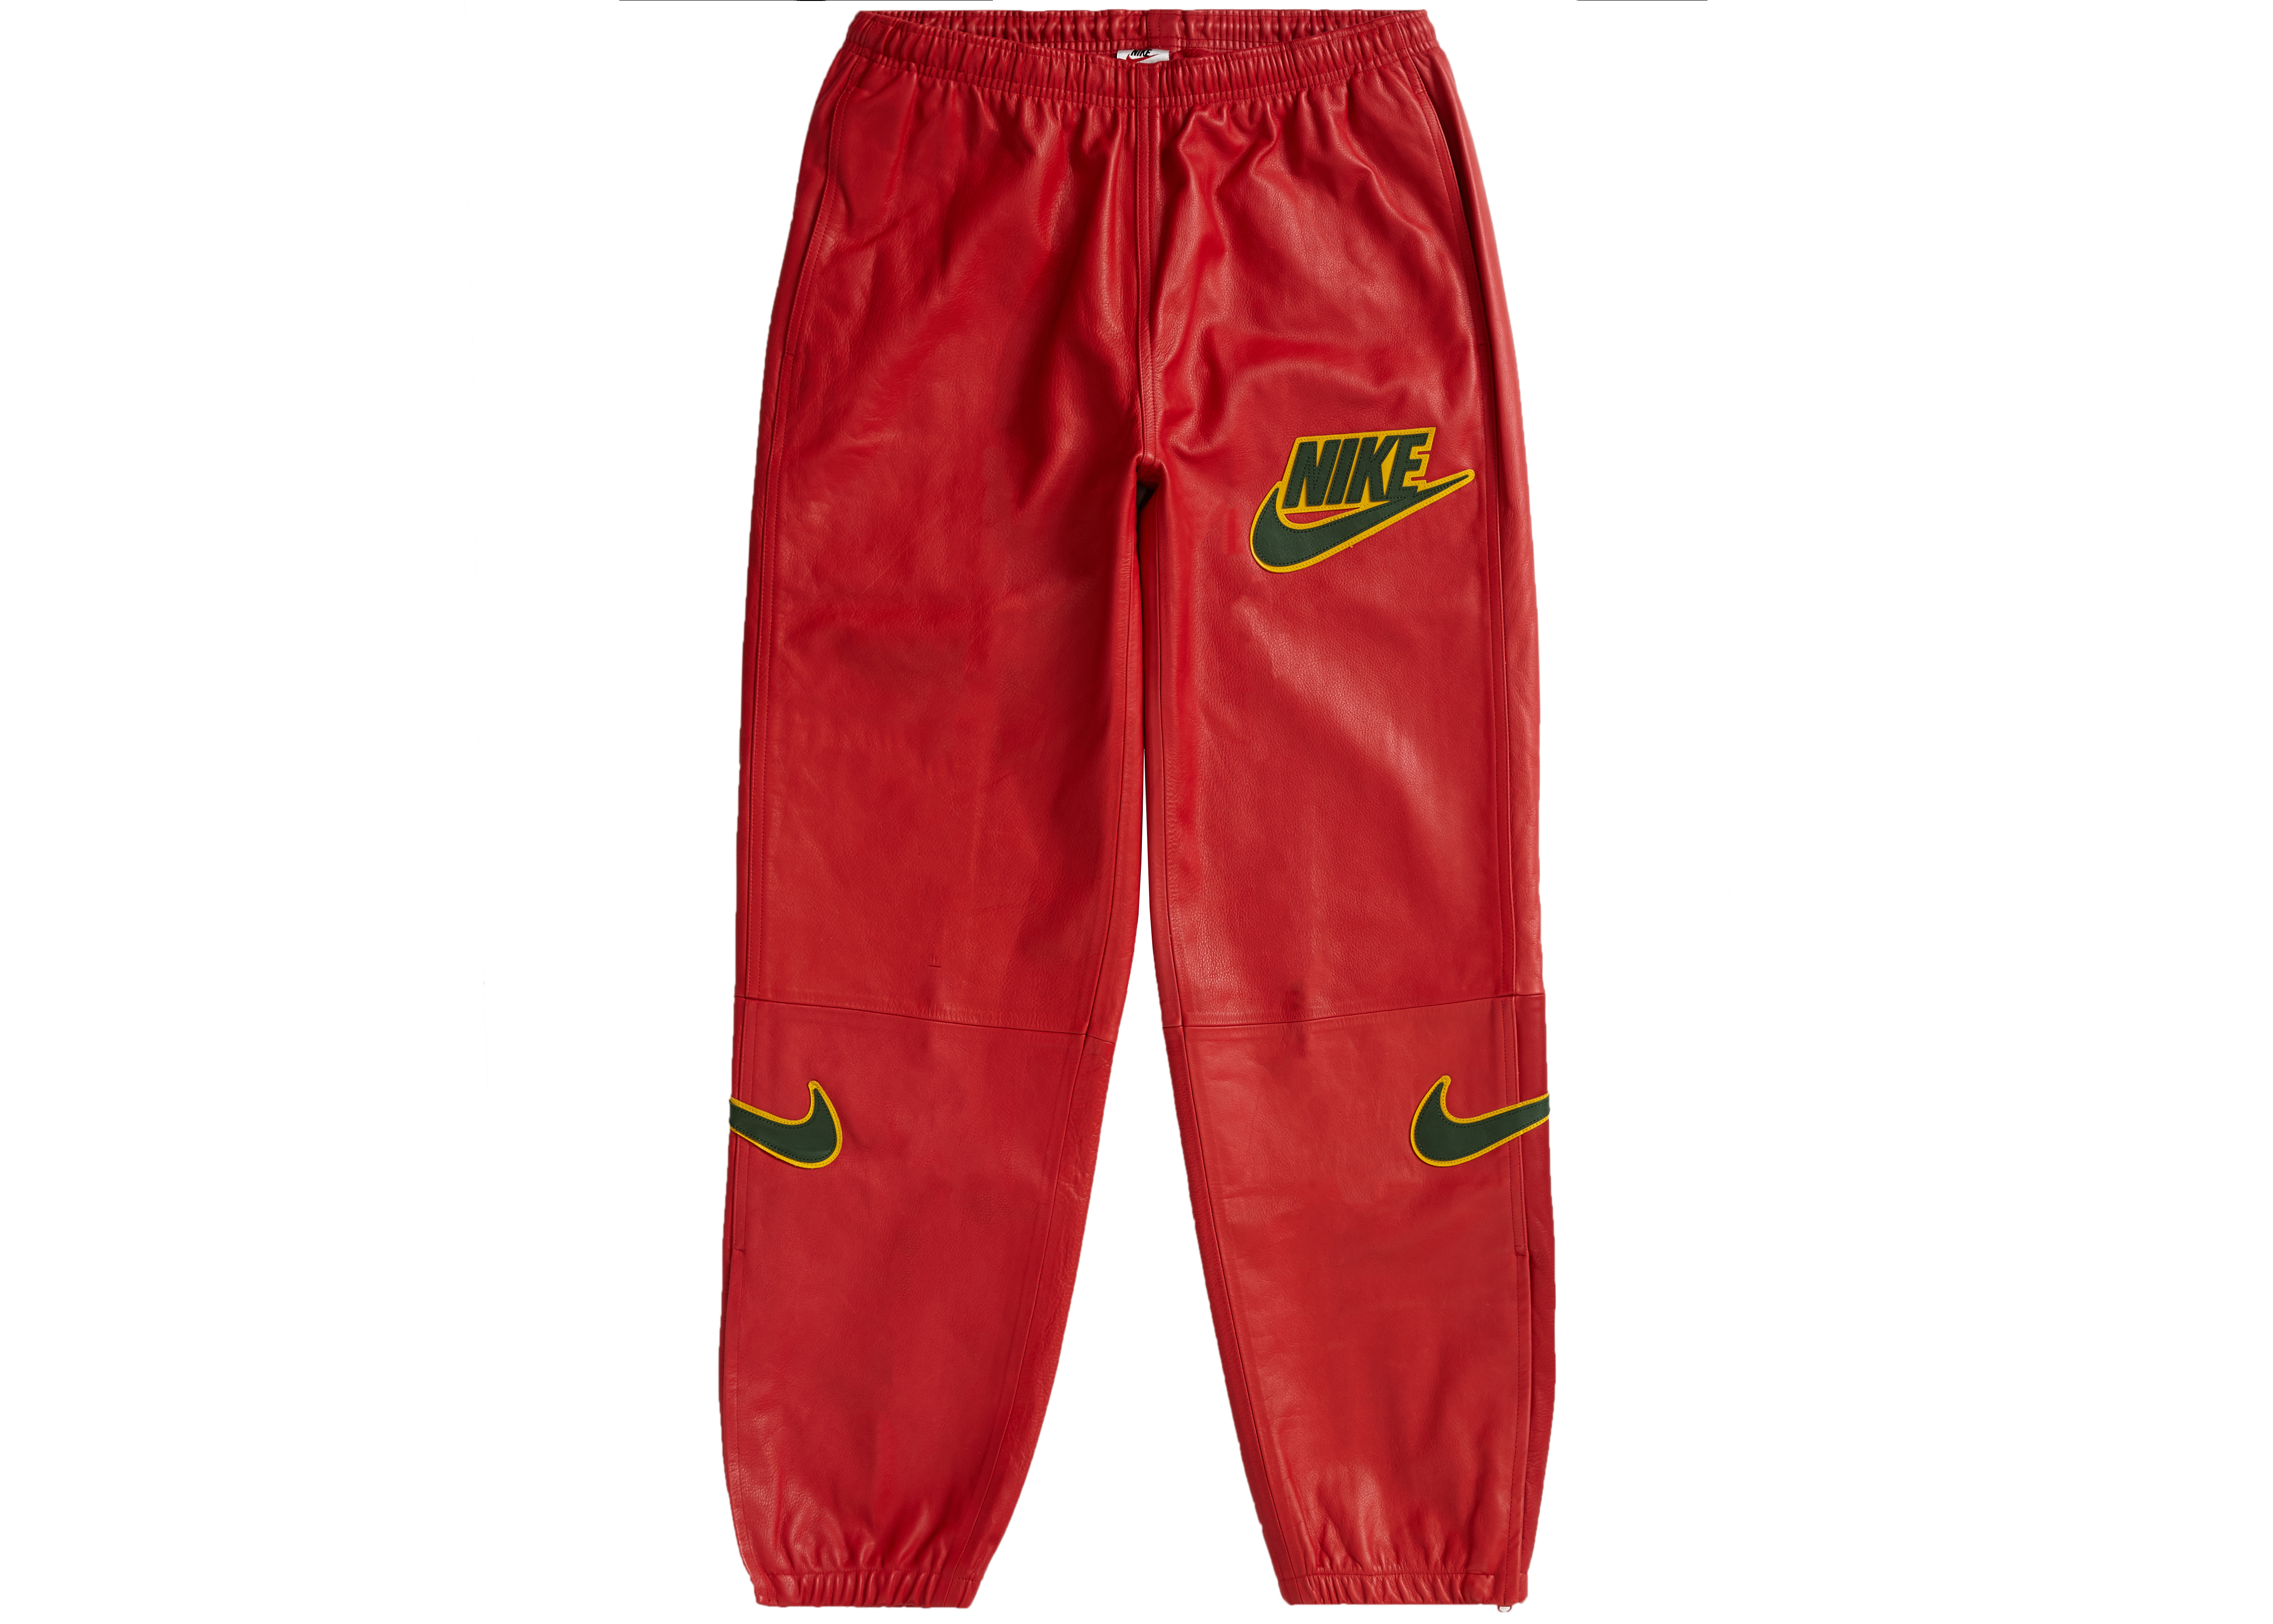 Supreme x Nike Leather Warm Up Pant Red - Novelship